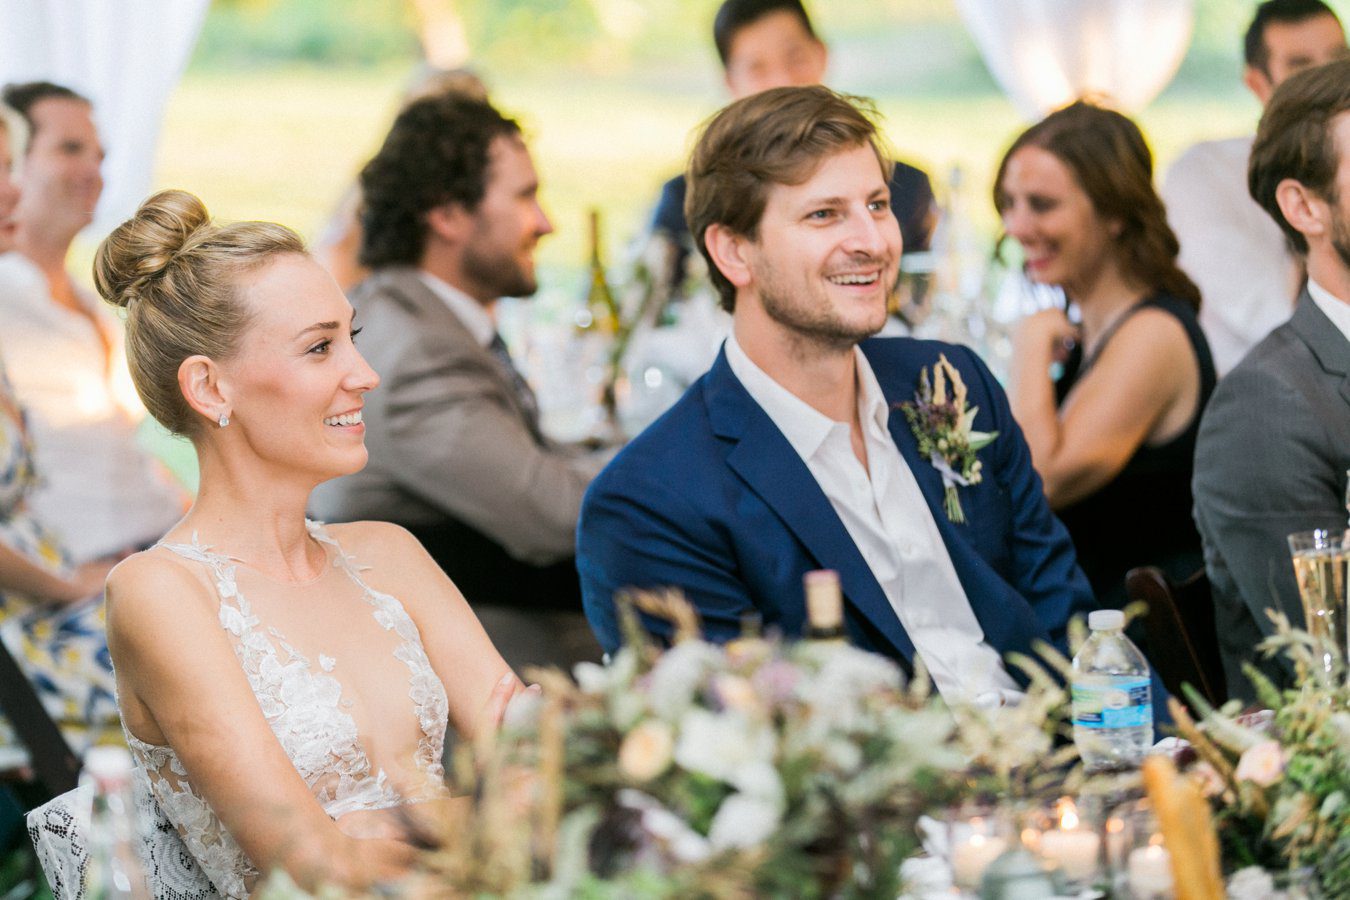 Happy bride & groom | Cory Weber Photography